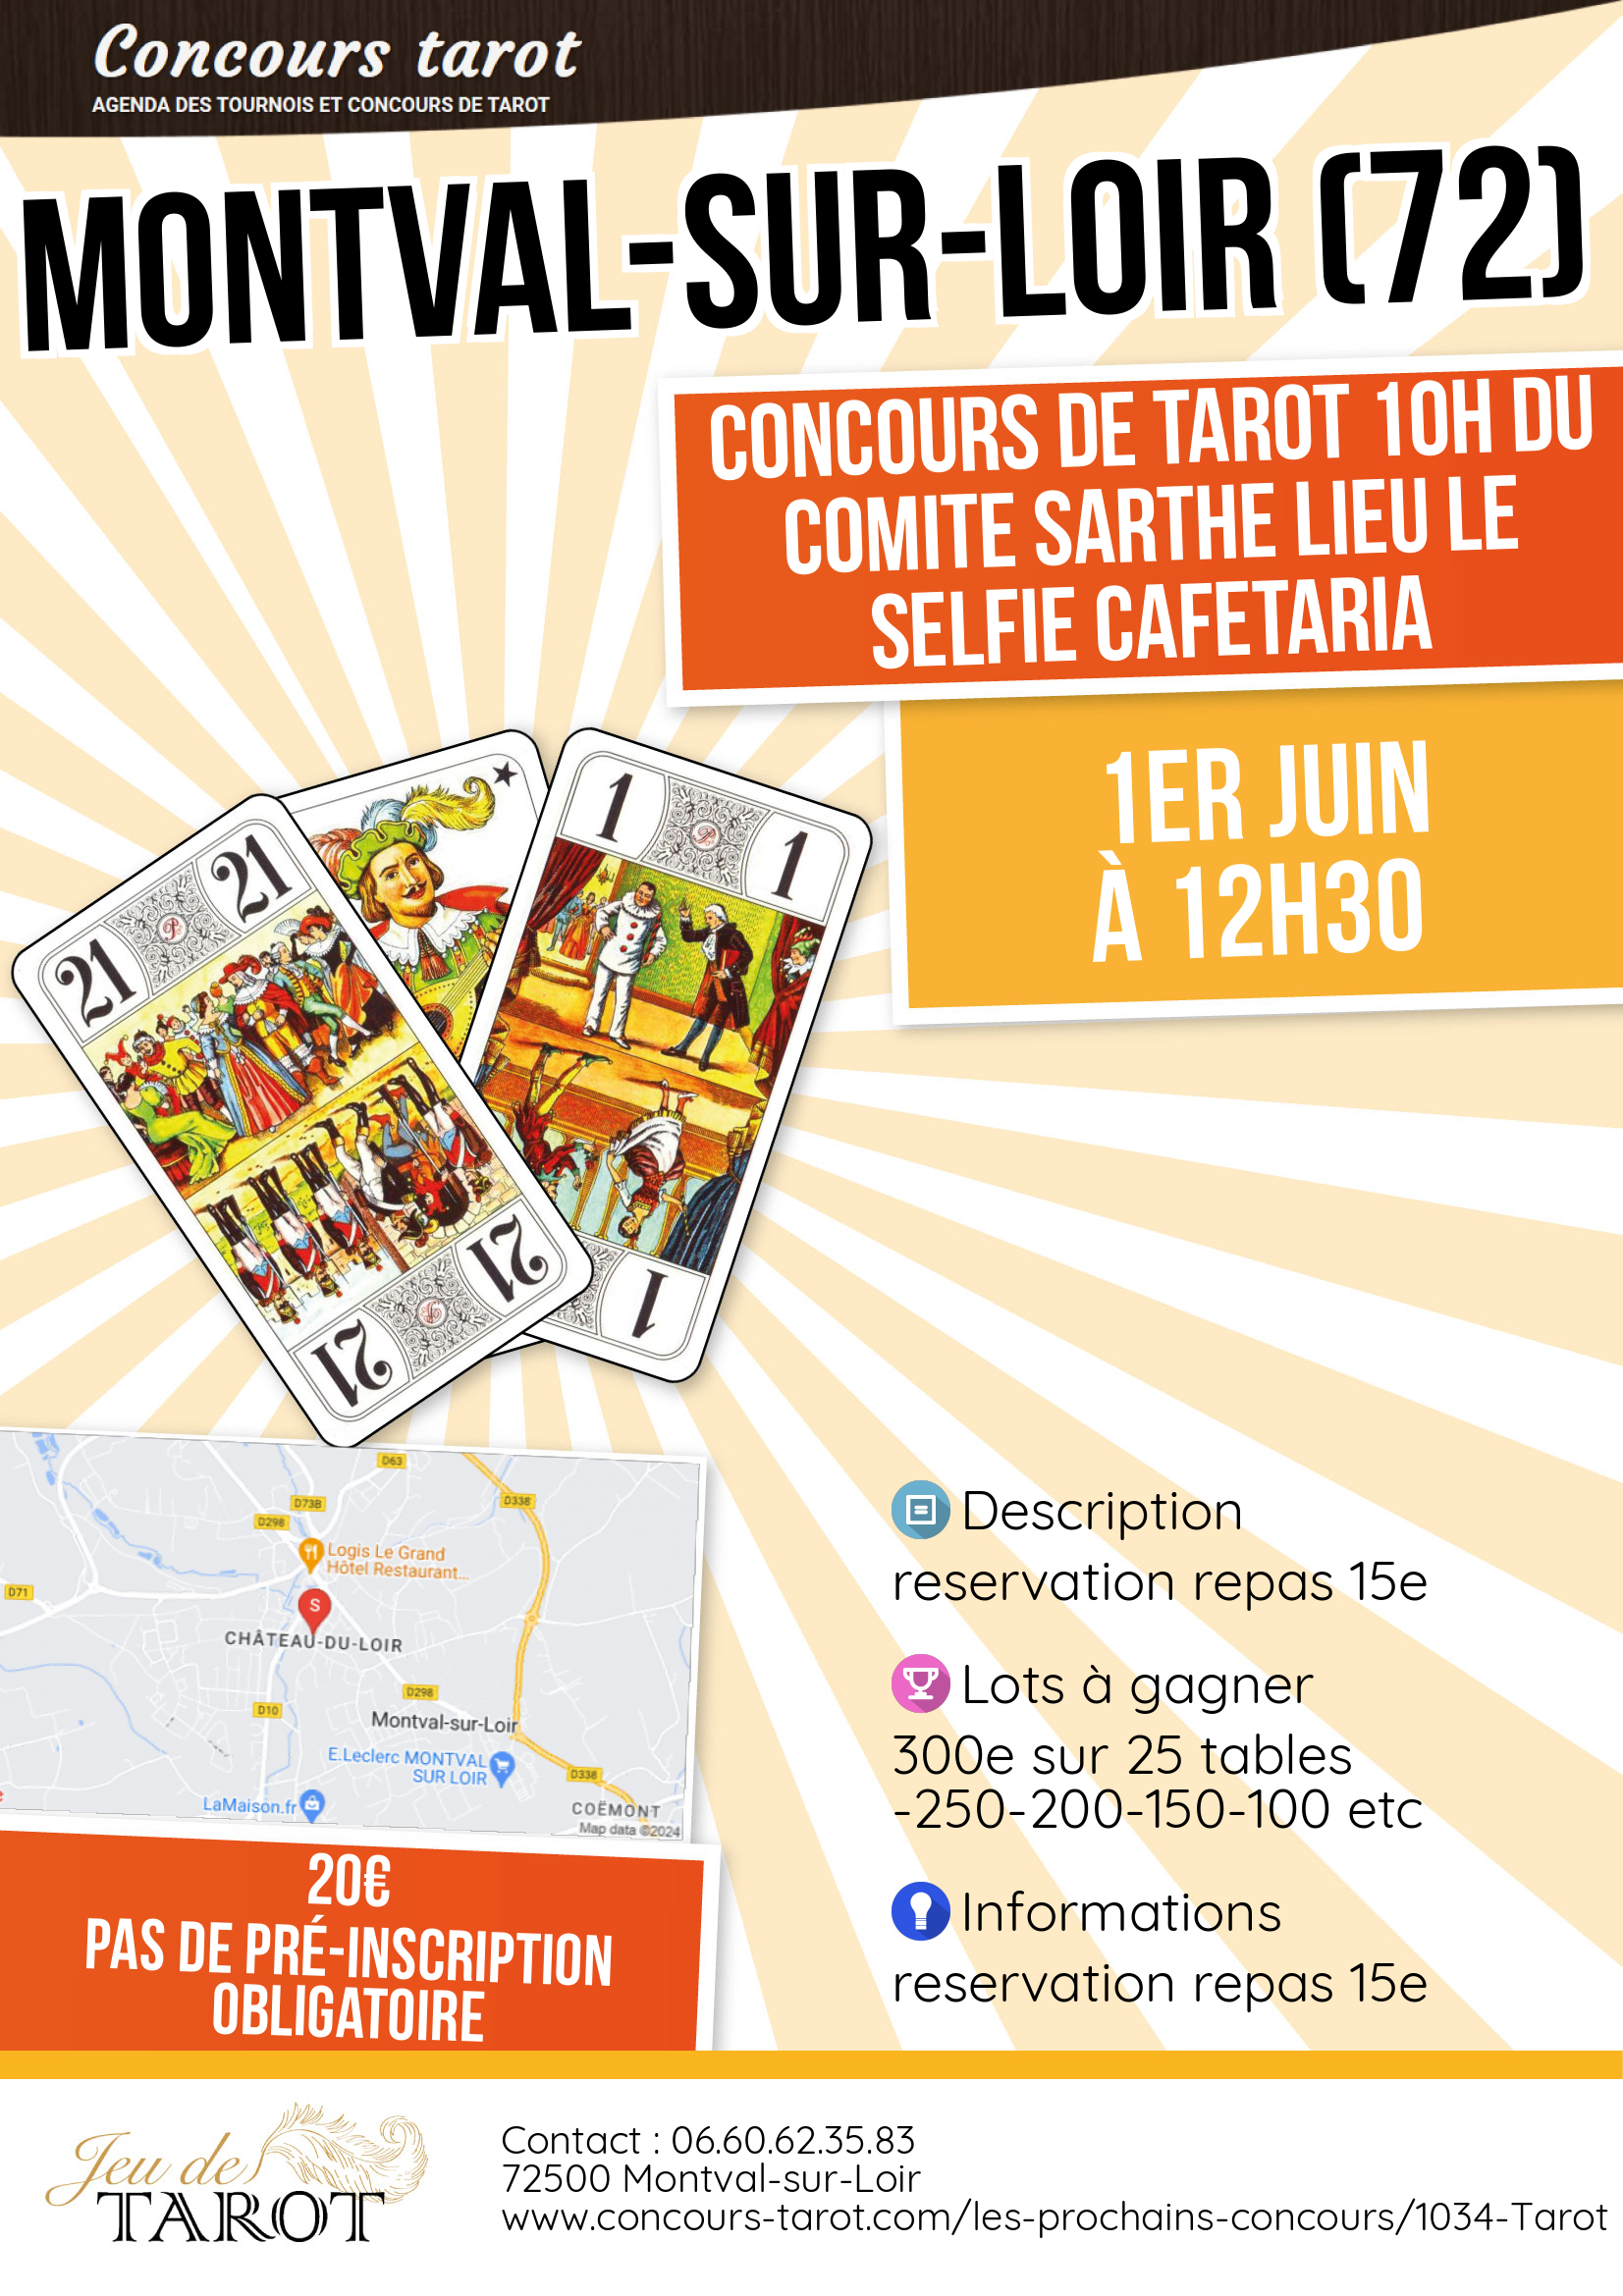 Concours de tarot 10h du comite sarthe lieu le selfie cafetaria